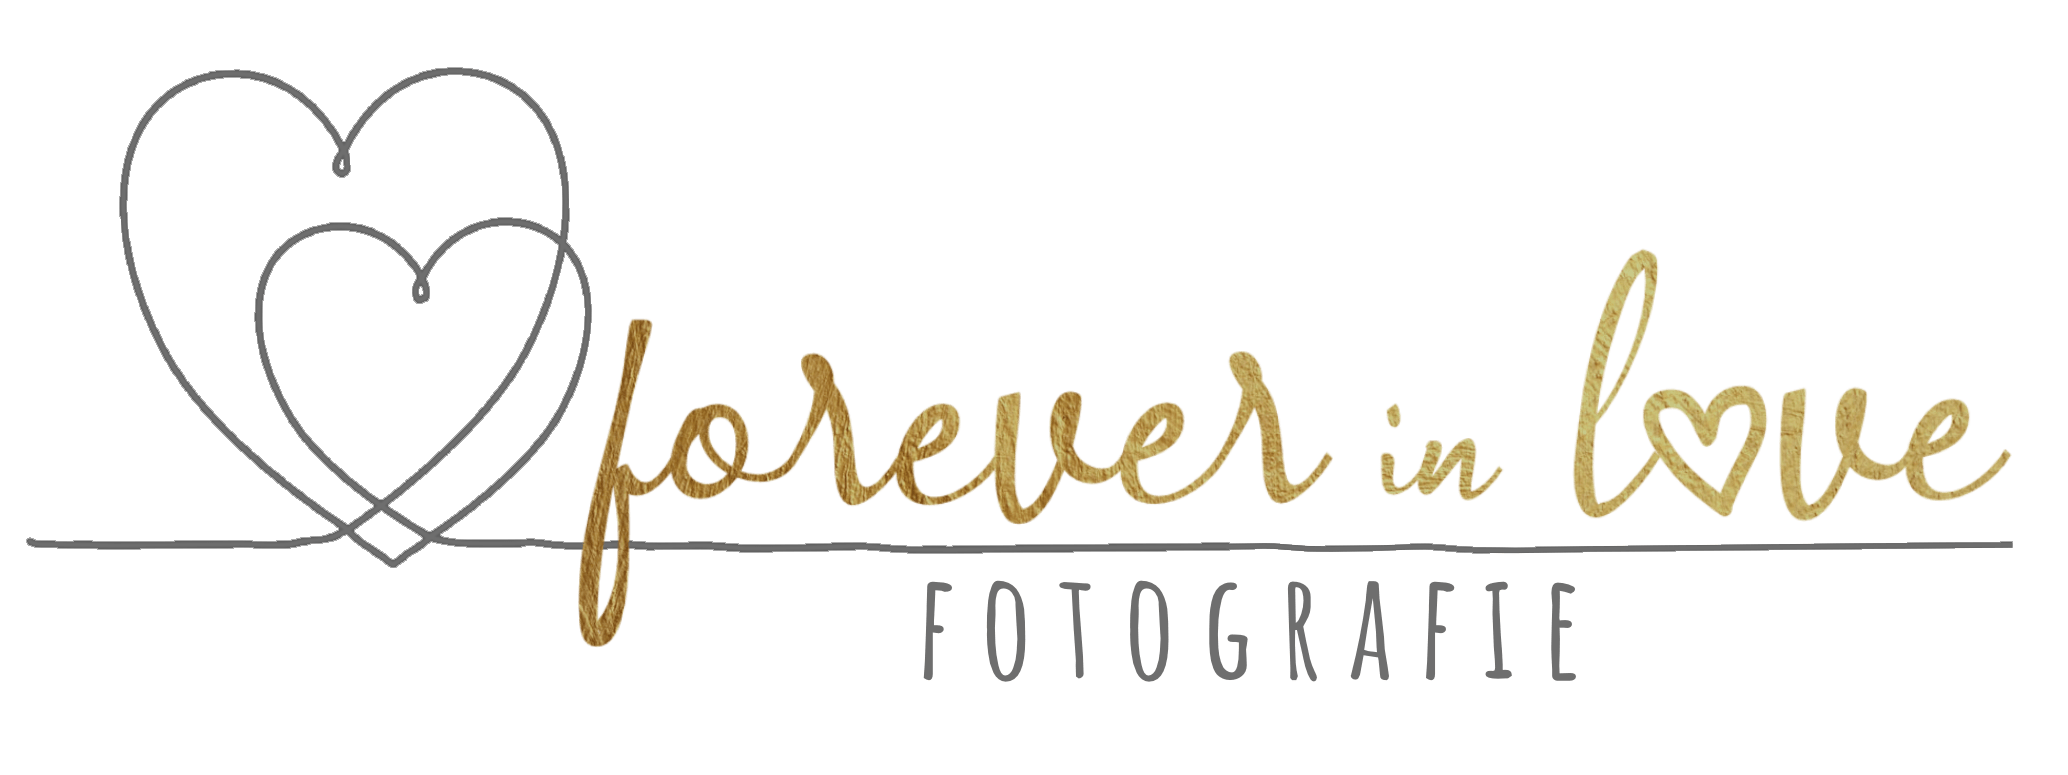 logo forever in love fotografie png